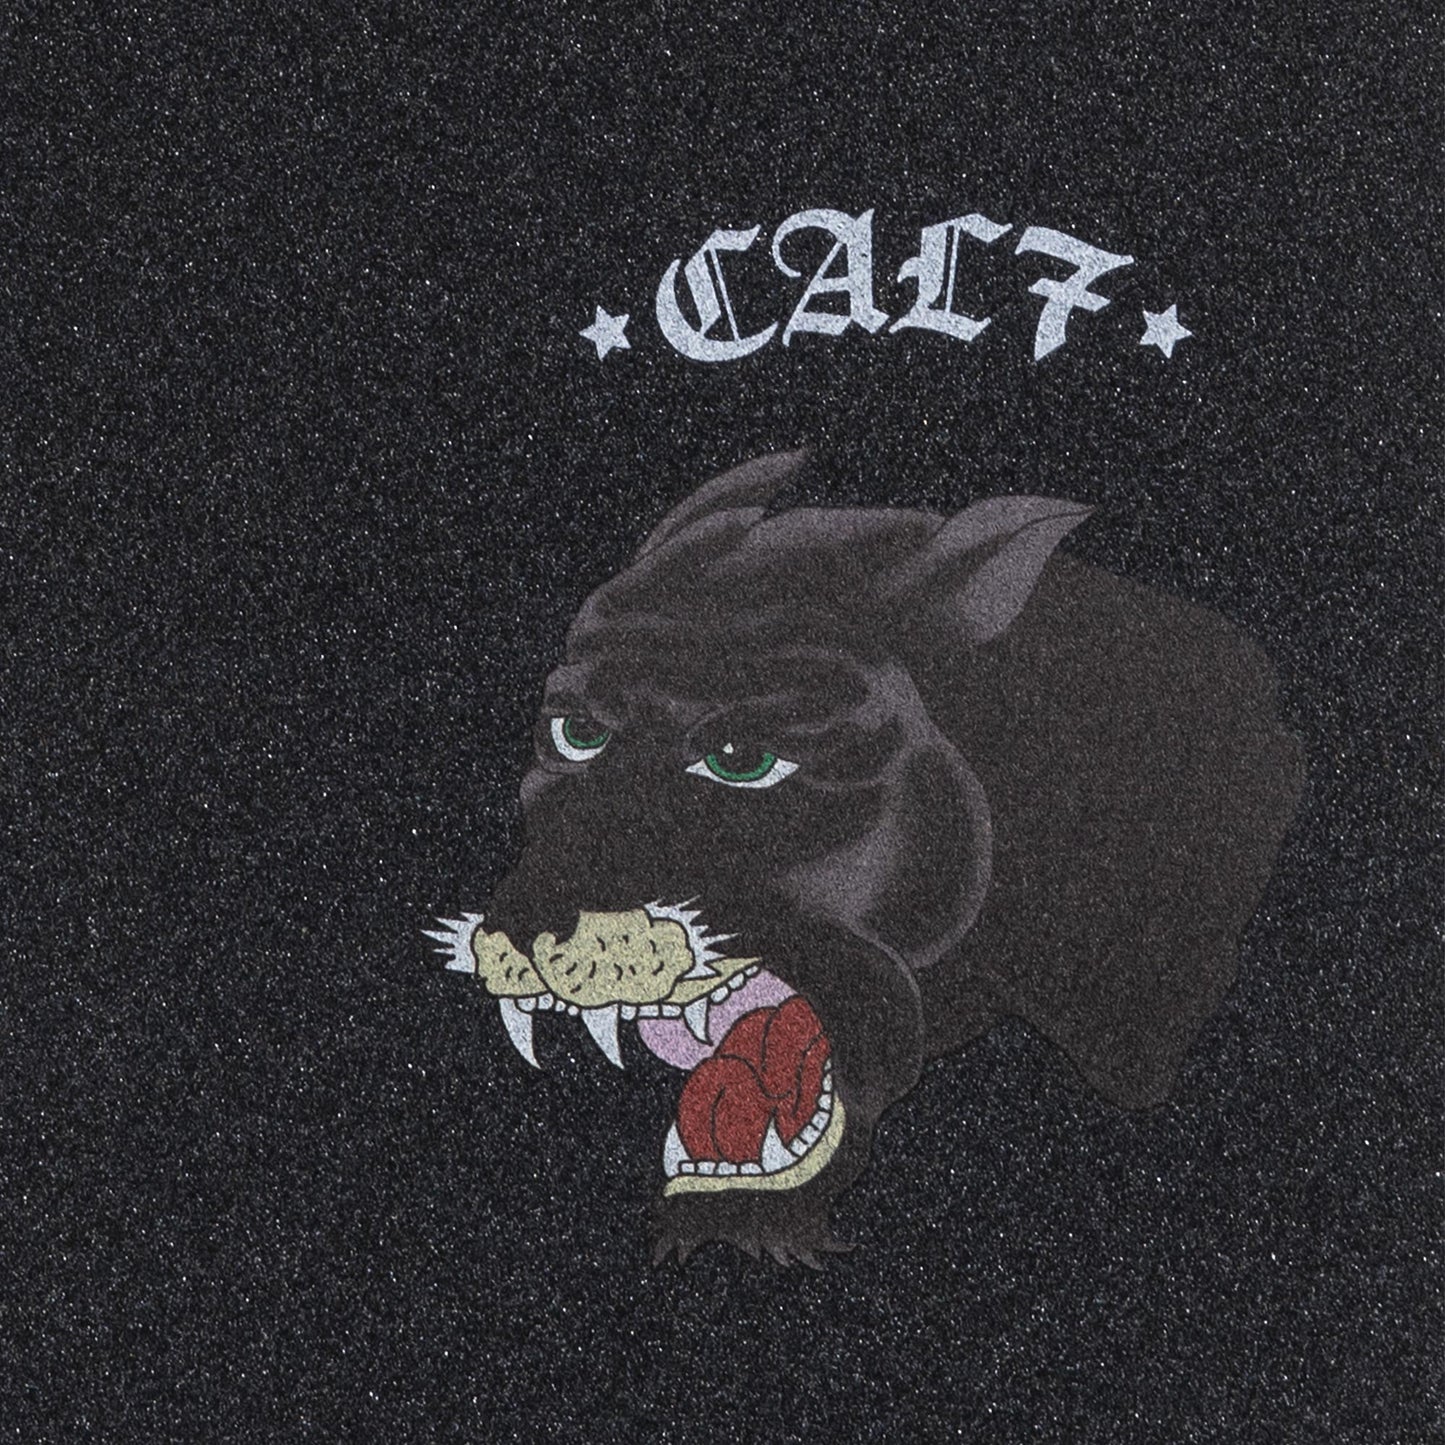 Cal 7 black skateboard griptape with panther design